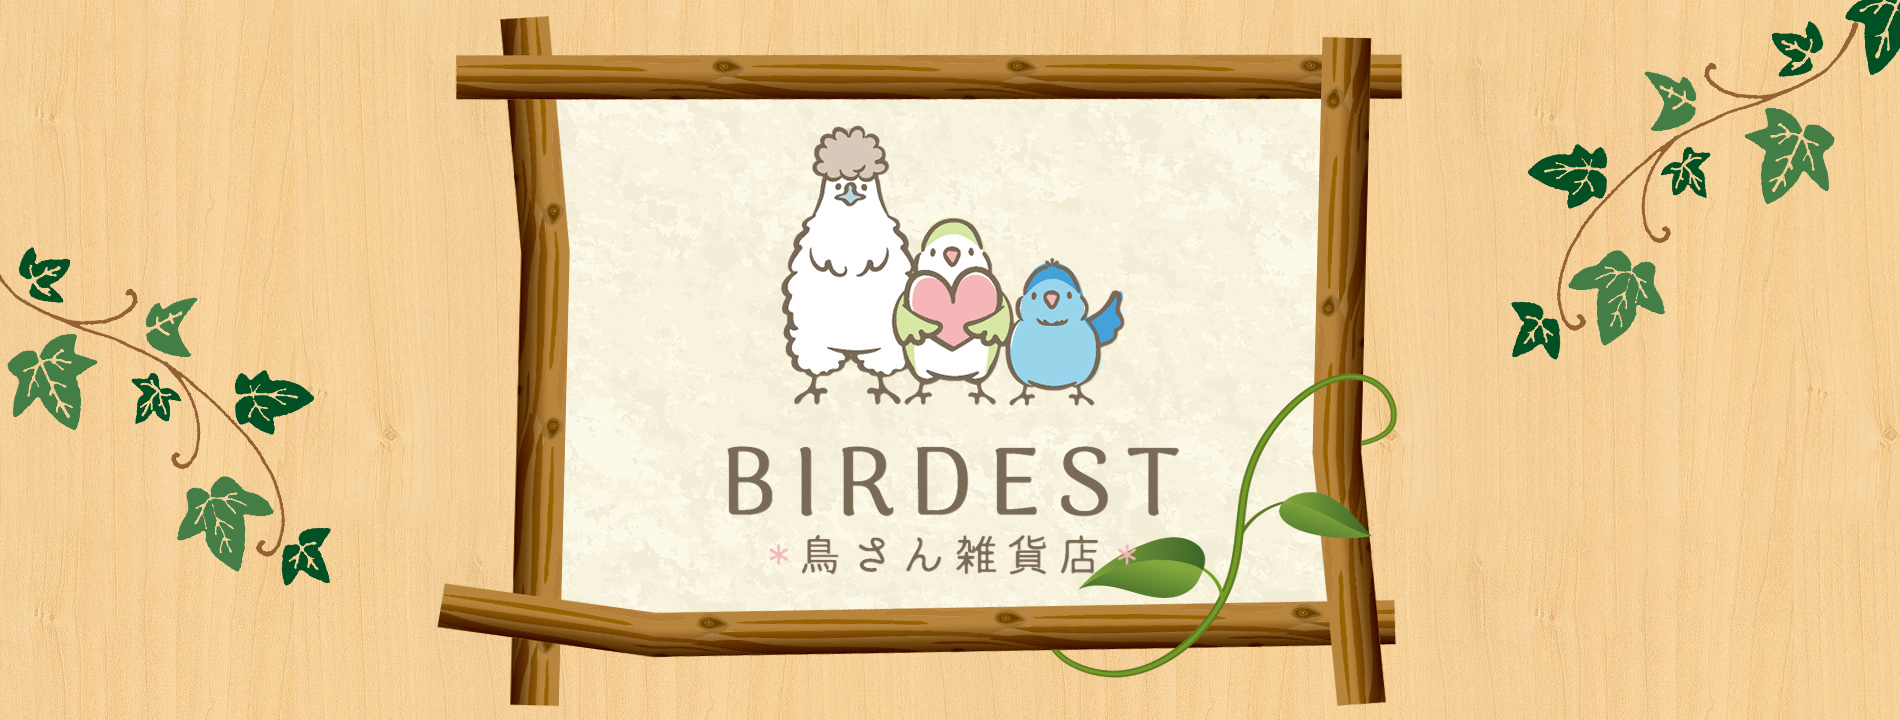 birdest鳥さん雑貨店